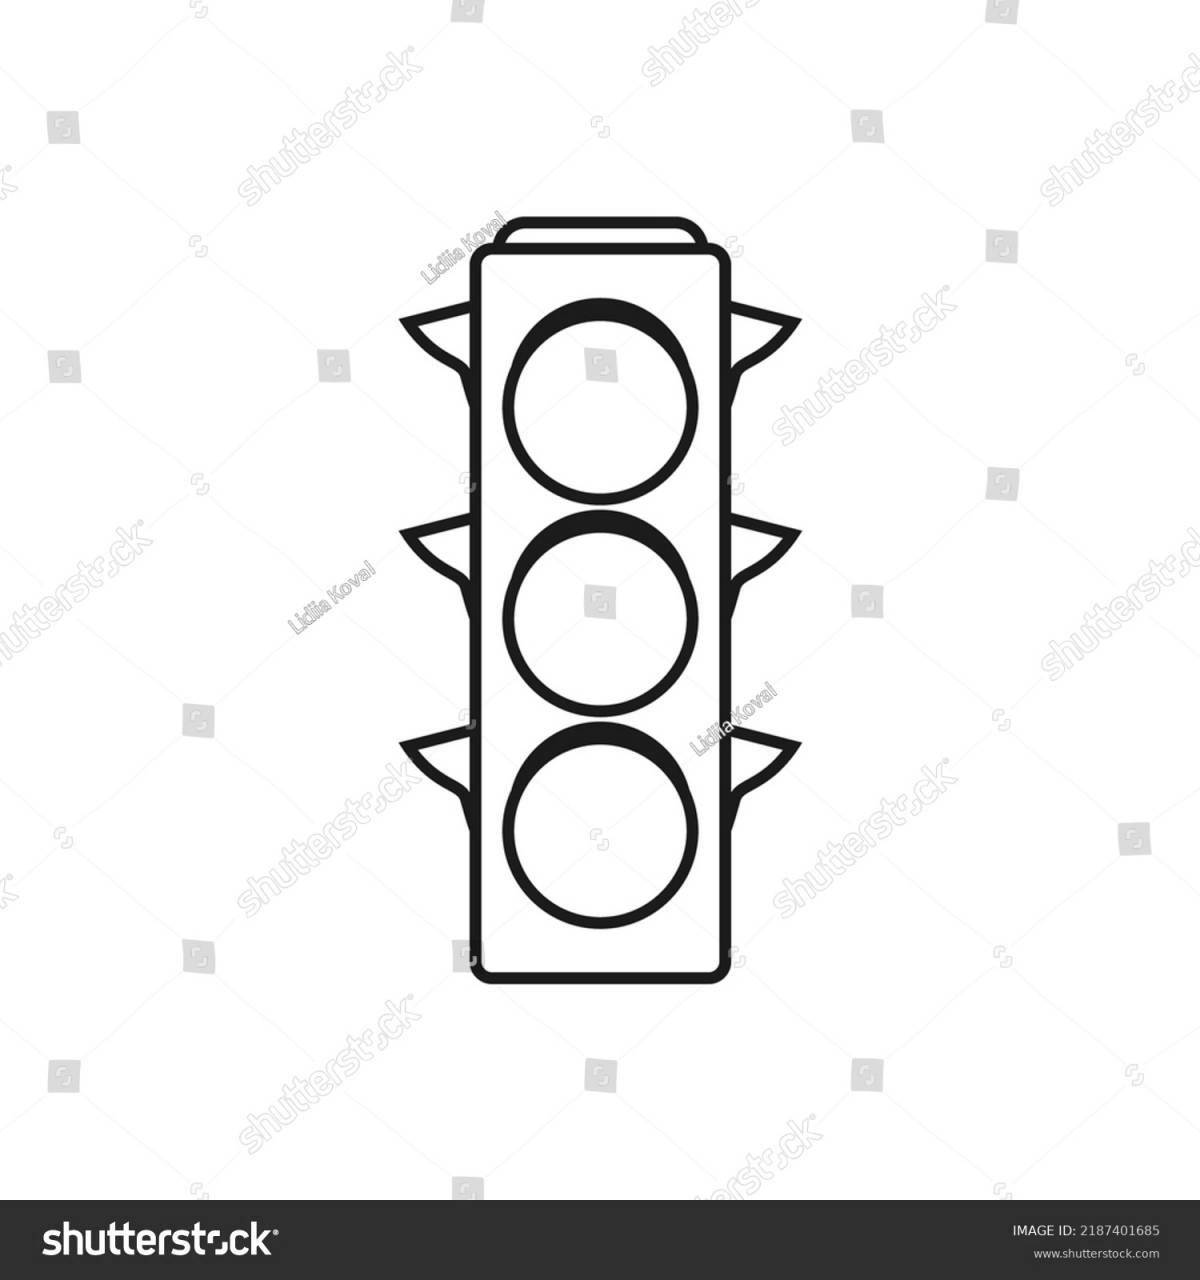 Impressive traffic light with siren